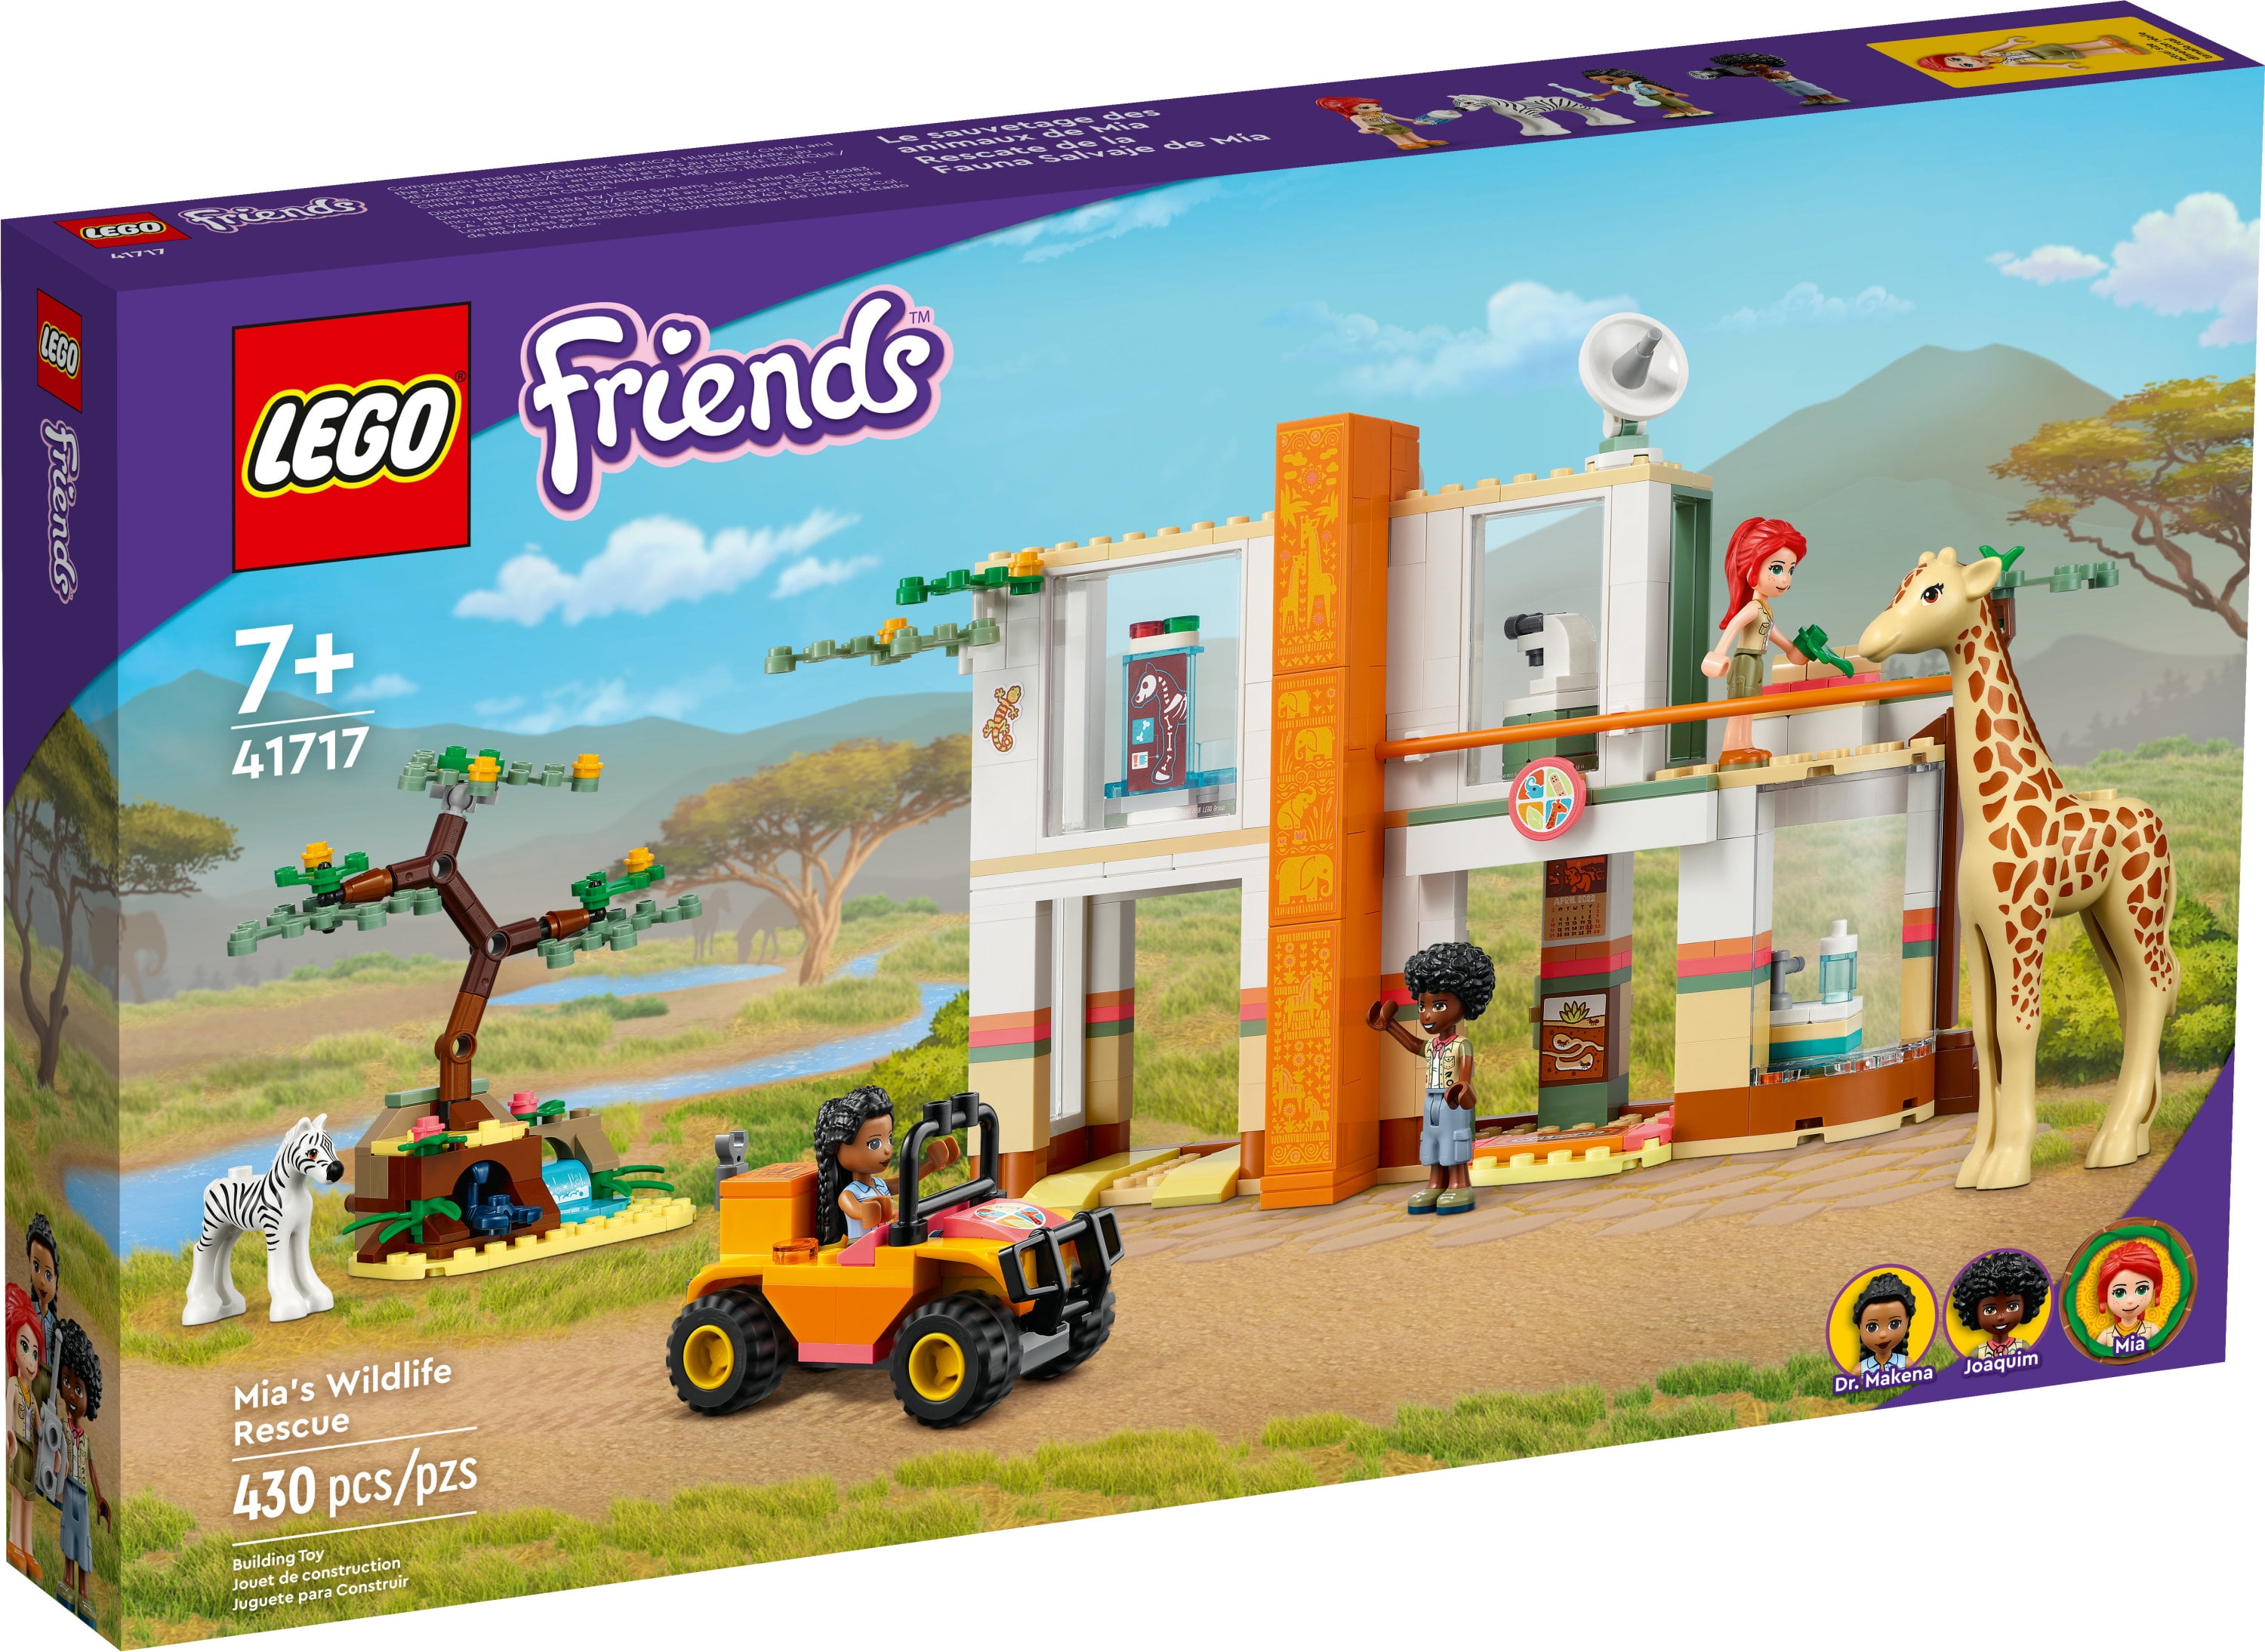 LEGO Friends Mia's Wildlife Rescue 41717 with Zebra and Giraffe Safari Figures plus 3 Mini Dolls, Gift Idea for Kids, Girls & Boys Age 7 Plus Years - Walmart.com